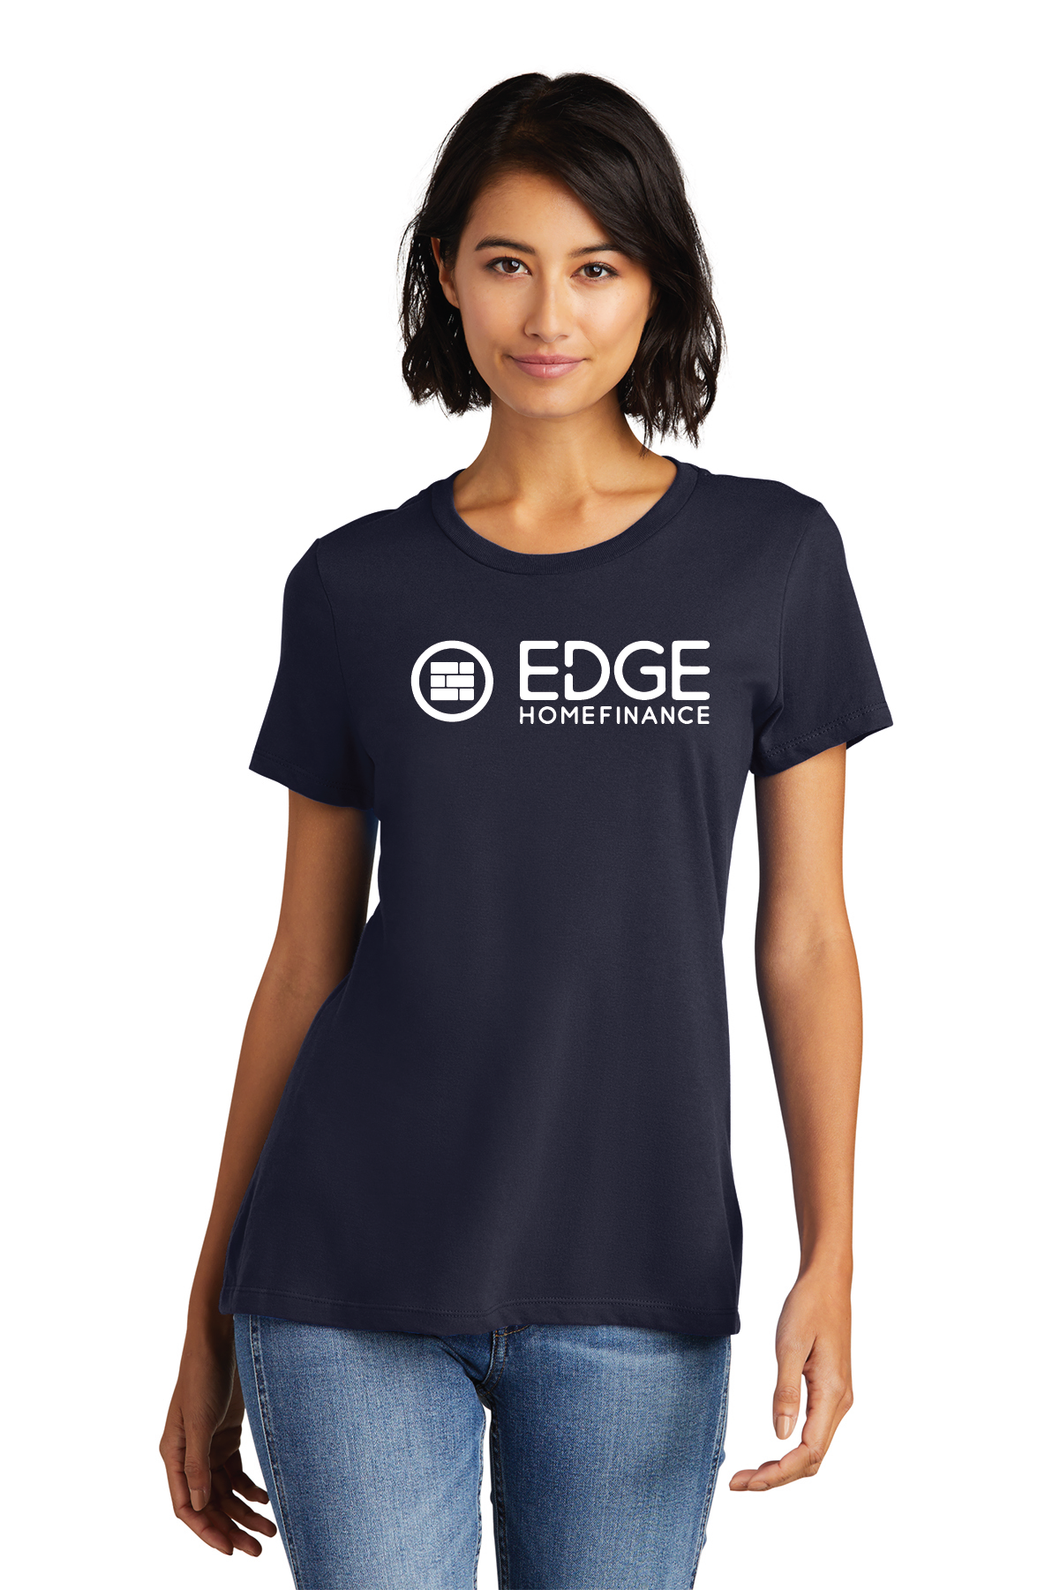 Edge Women's Navy Tee